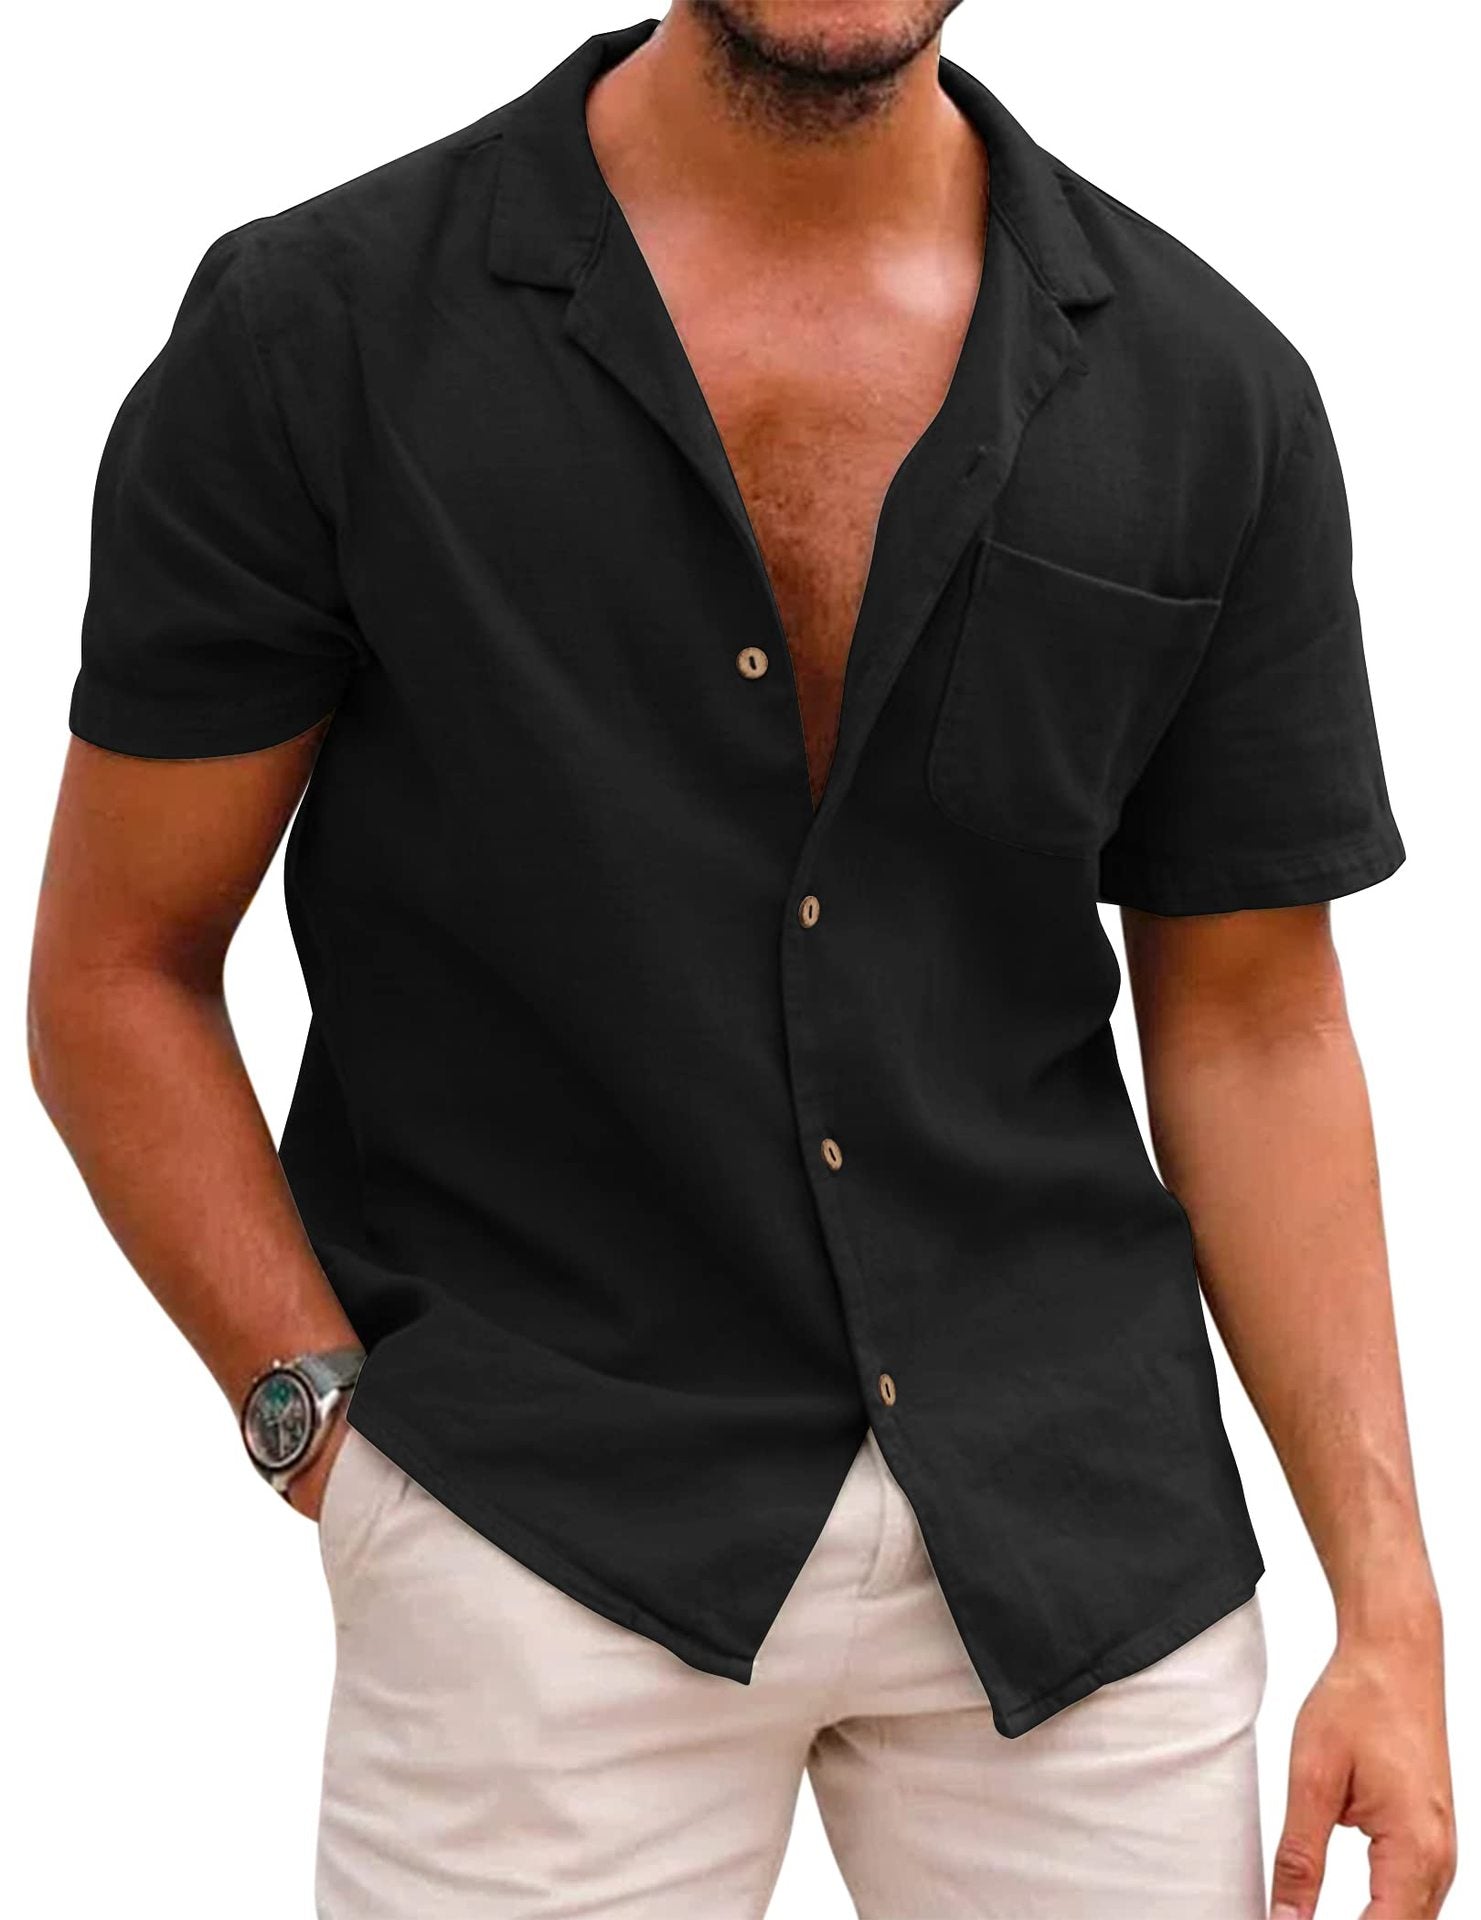 Casual Linen Short Sleeves Shirts for Men-Shirts & Tops-Black-S-Free Shipping at meselling99